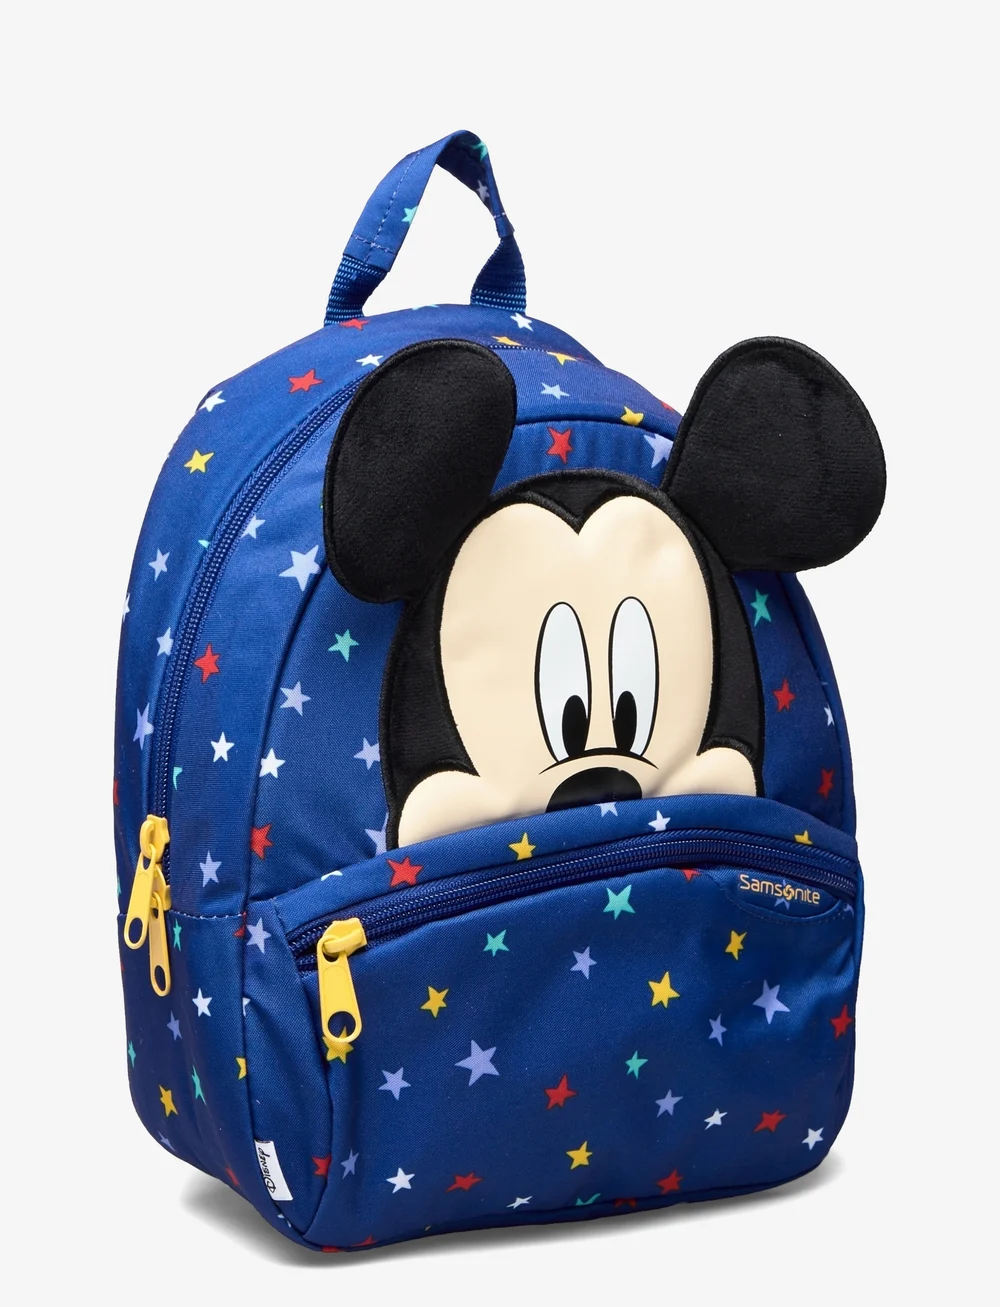 Samsonite Disney Ultimate Mickey Stars Backpack S - Backpacks